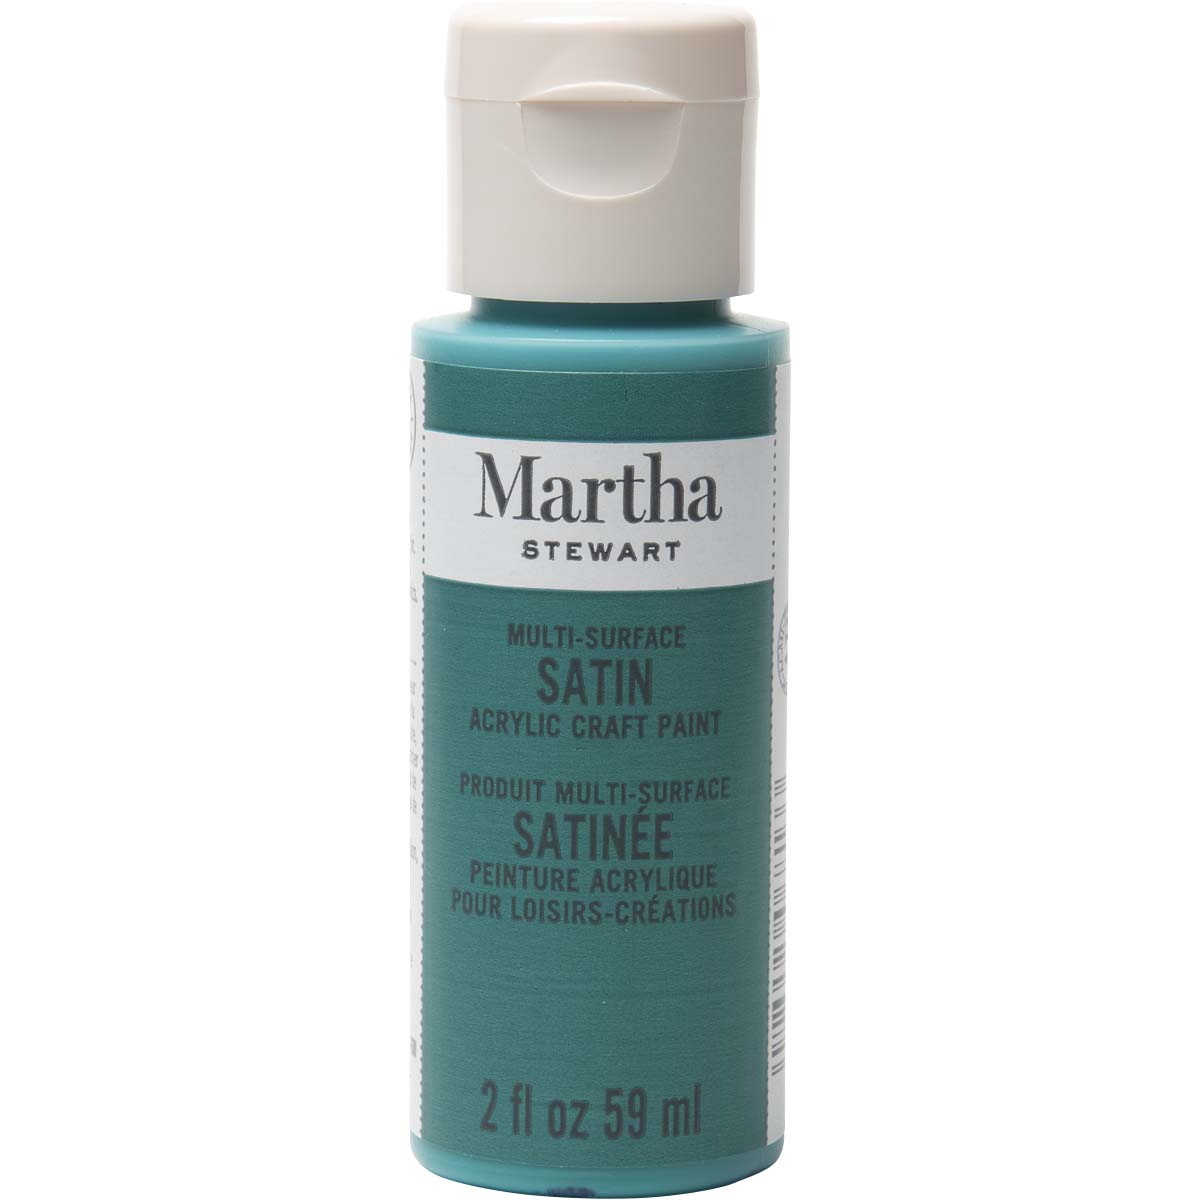 Martha Stewart ® Multi-Surface Satin Acrylic Craft Paint - Mermaid Teal, 2 oz. - 33506CA